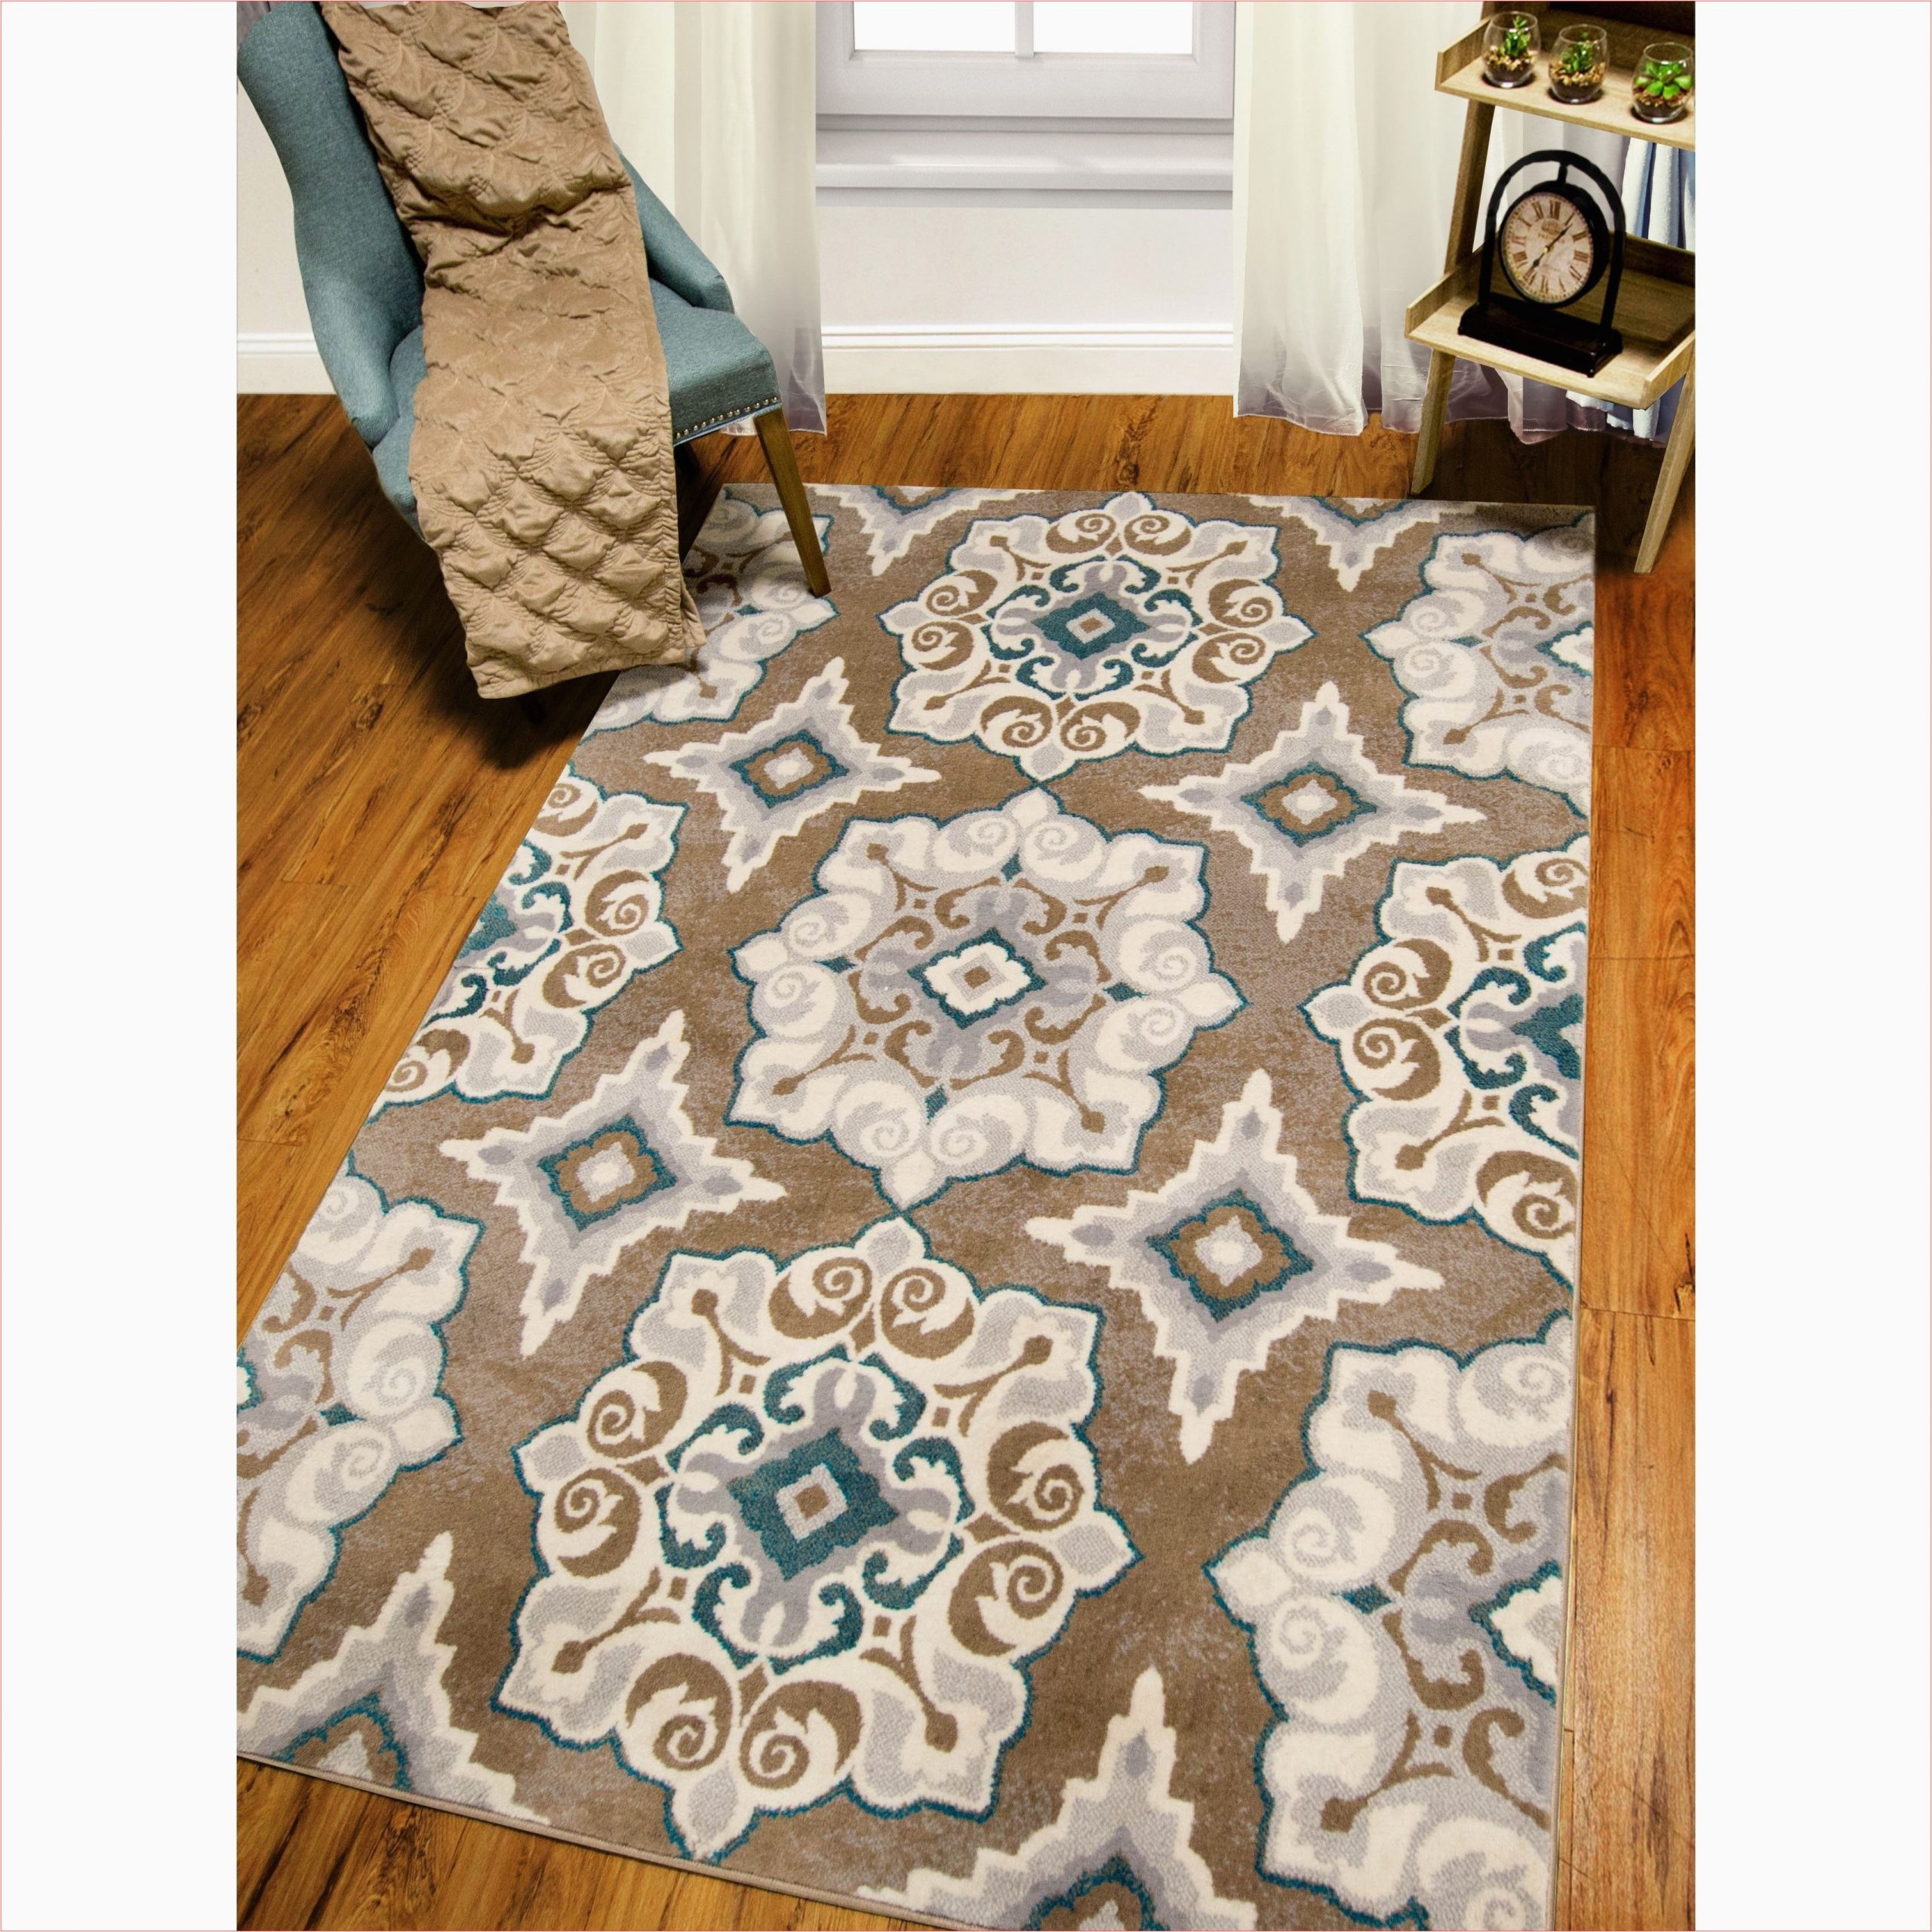 carpet in bedrooms vs hardwood flooring